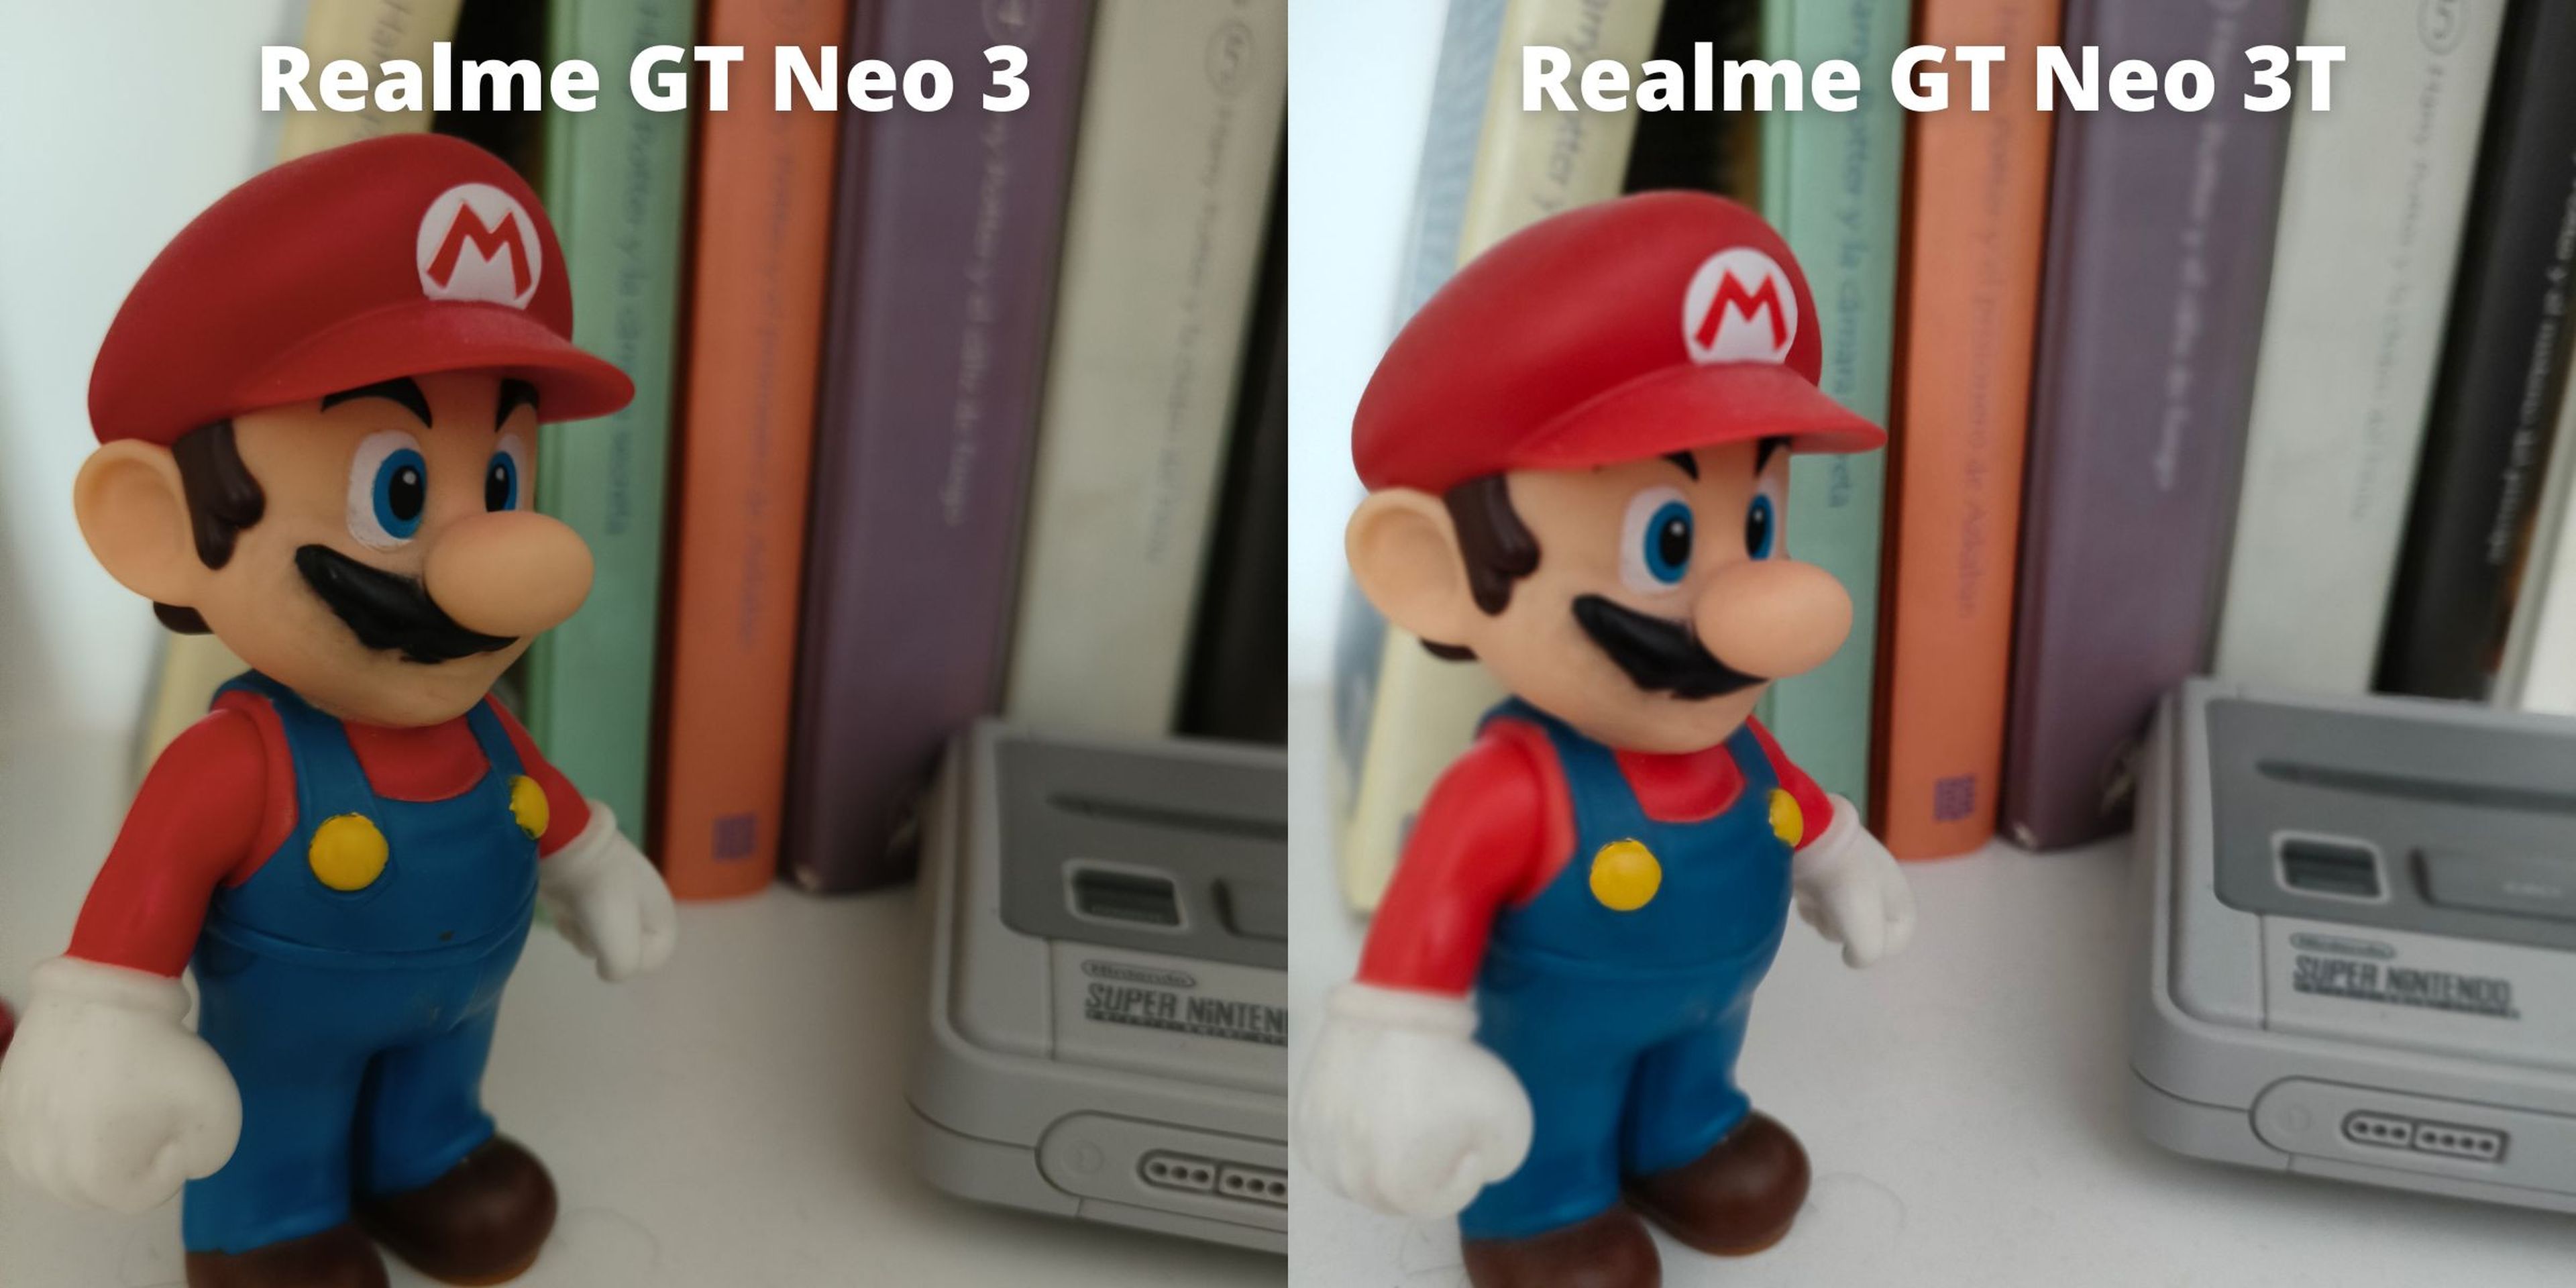 Realme GT Neo 3T vs Realme GT Neo 3